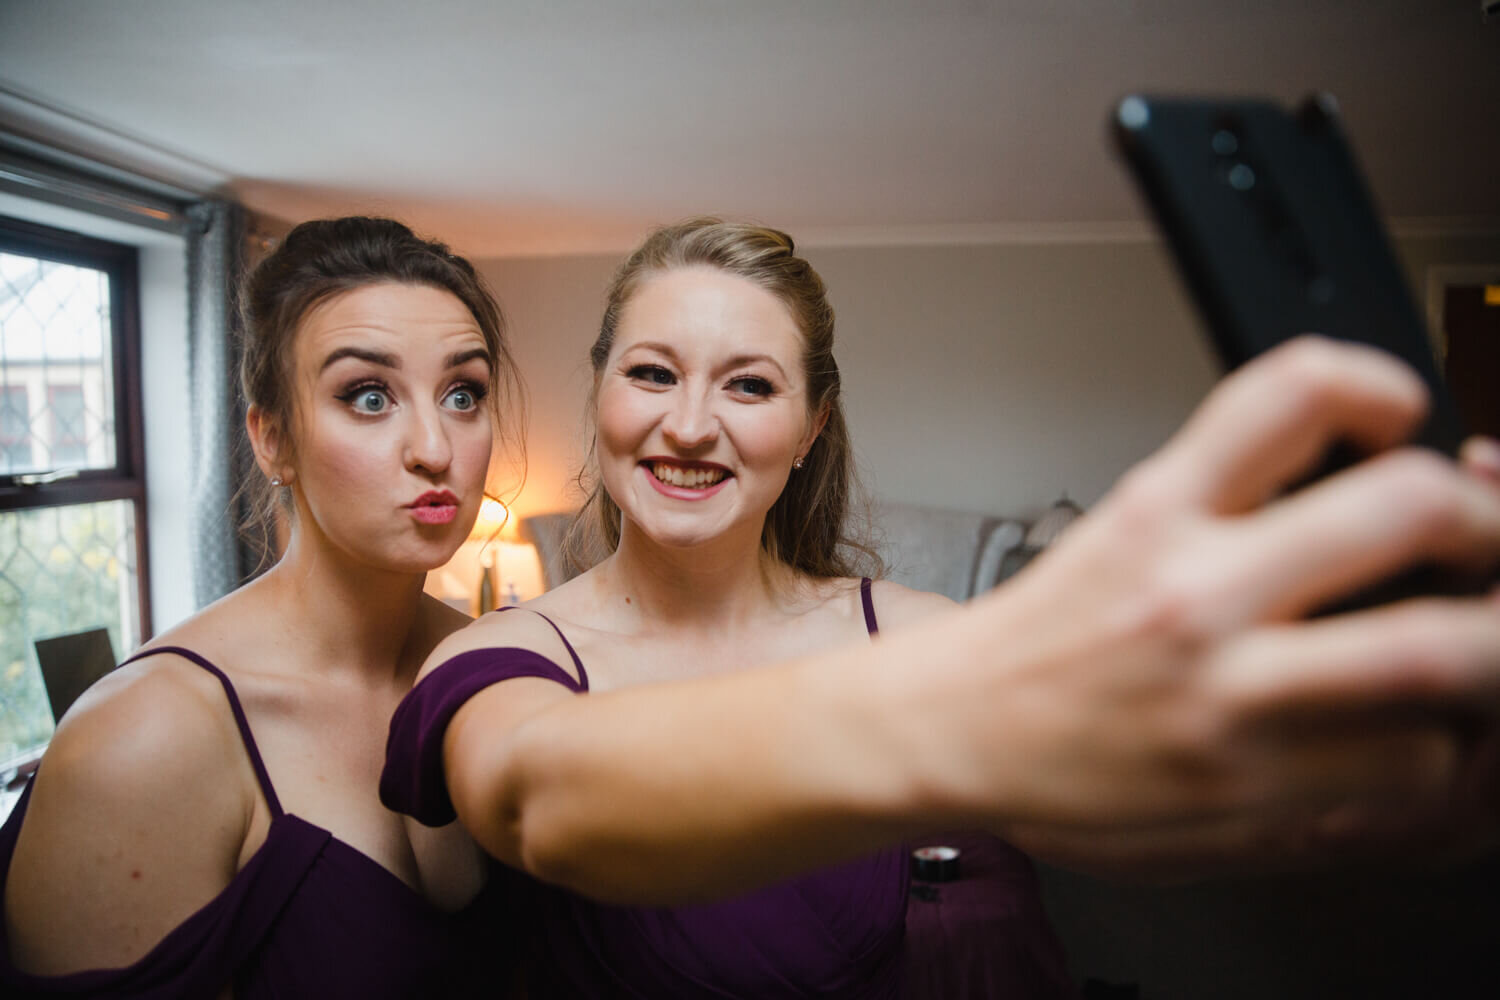 bridesmaids taking selfie photograph on camera phone